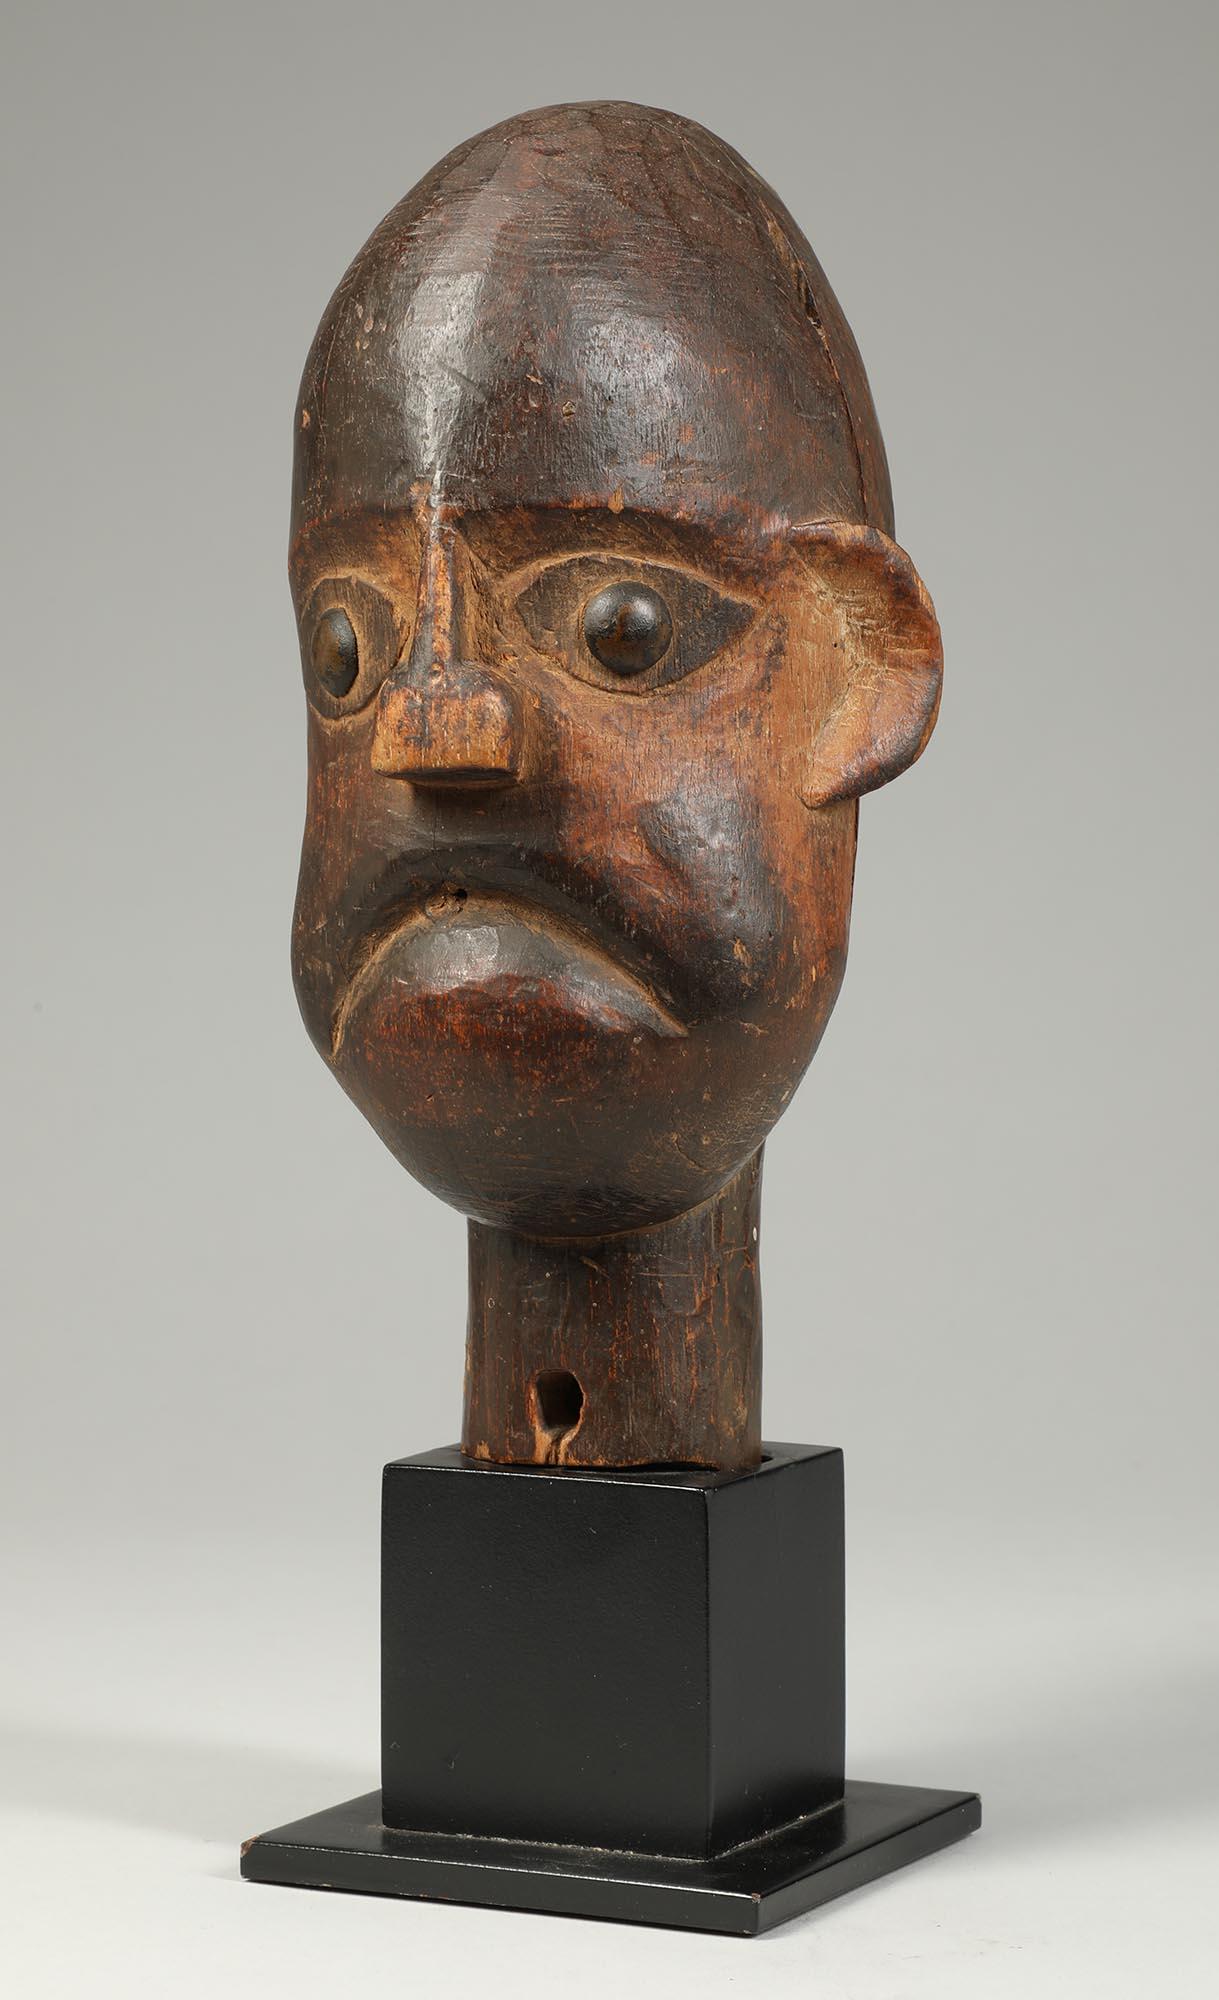 Nigerian Cubist Ibibio Puppet Head Brass Eyes Nigeria Early 20th Century stern gaze stand For Sale